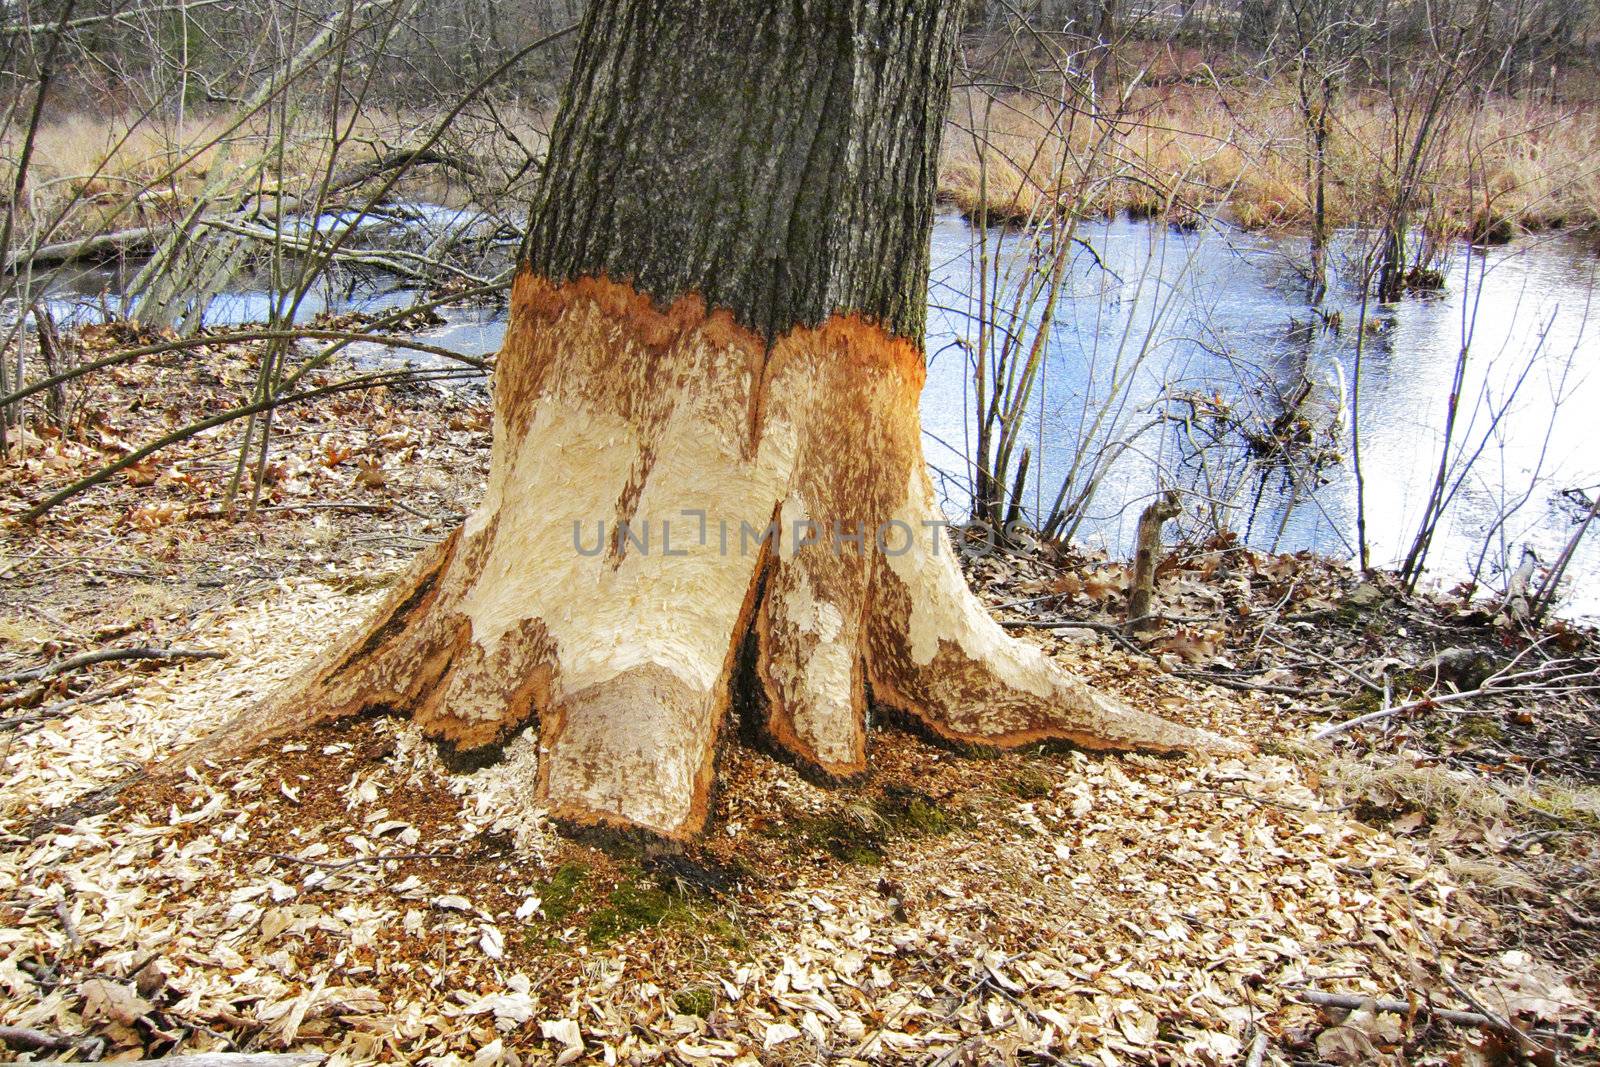 Beaver tree damage by f/2sumicron